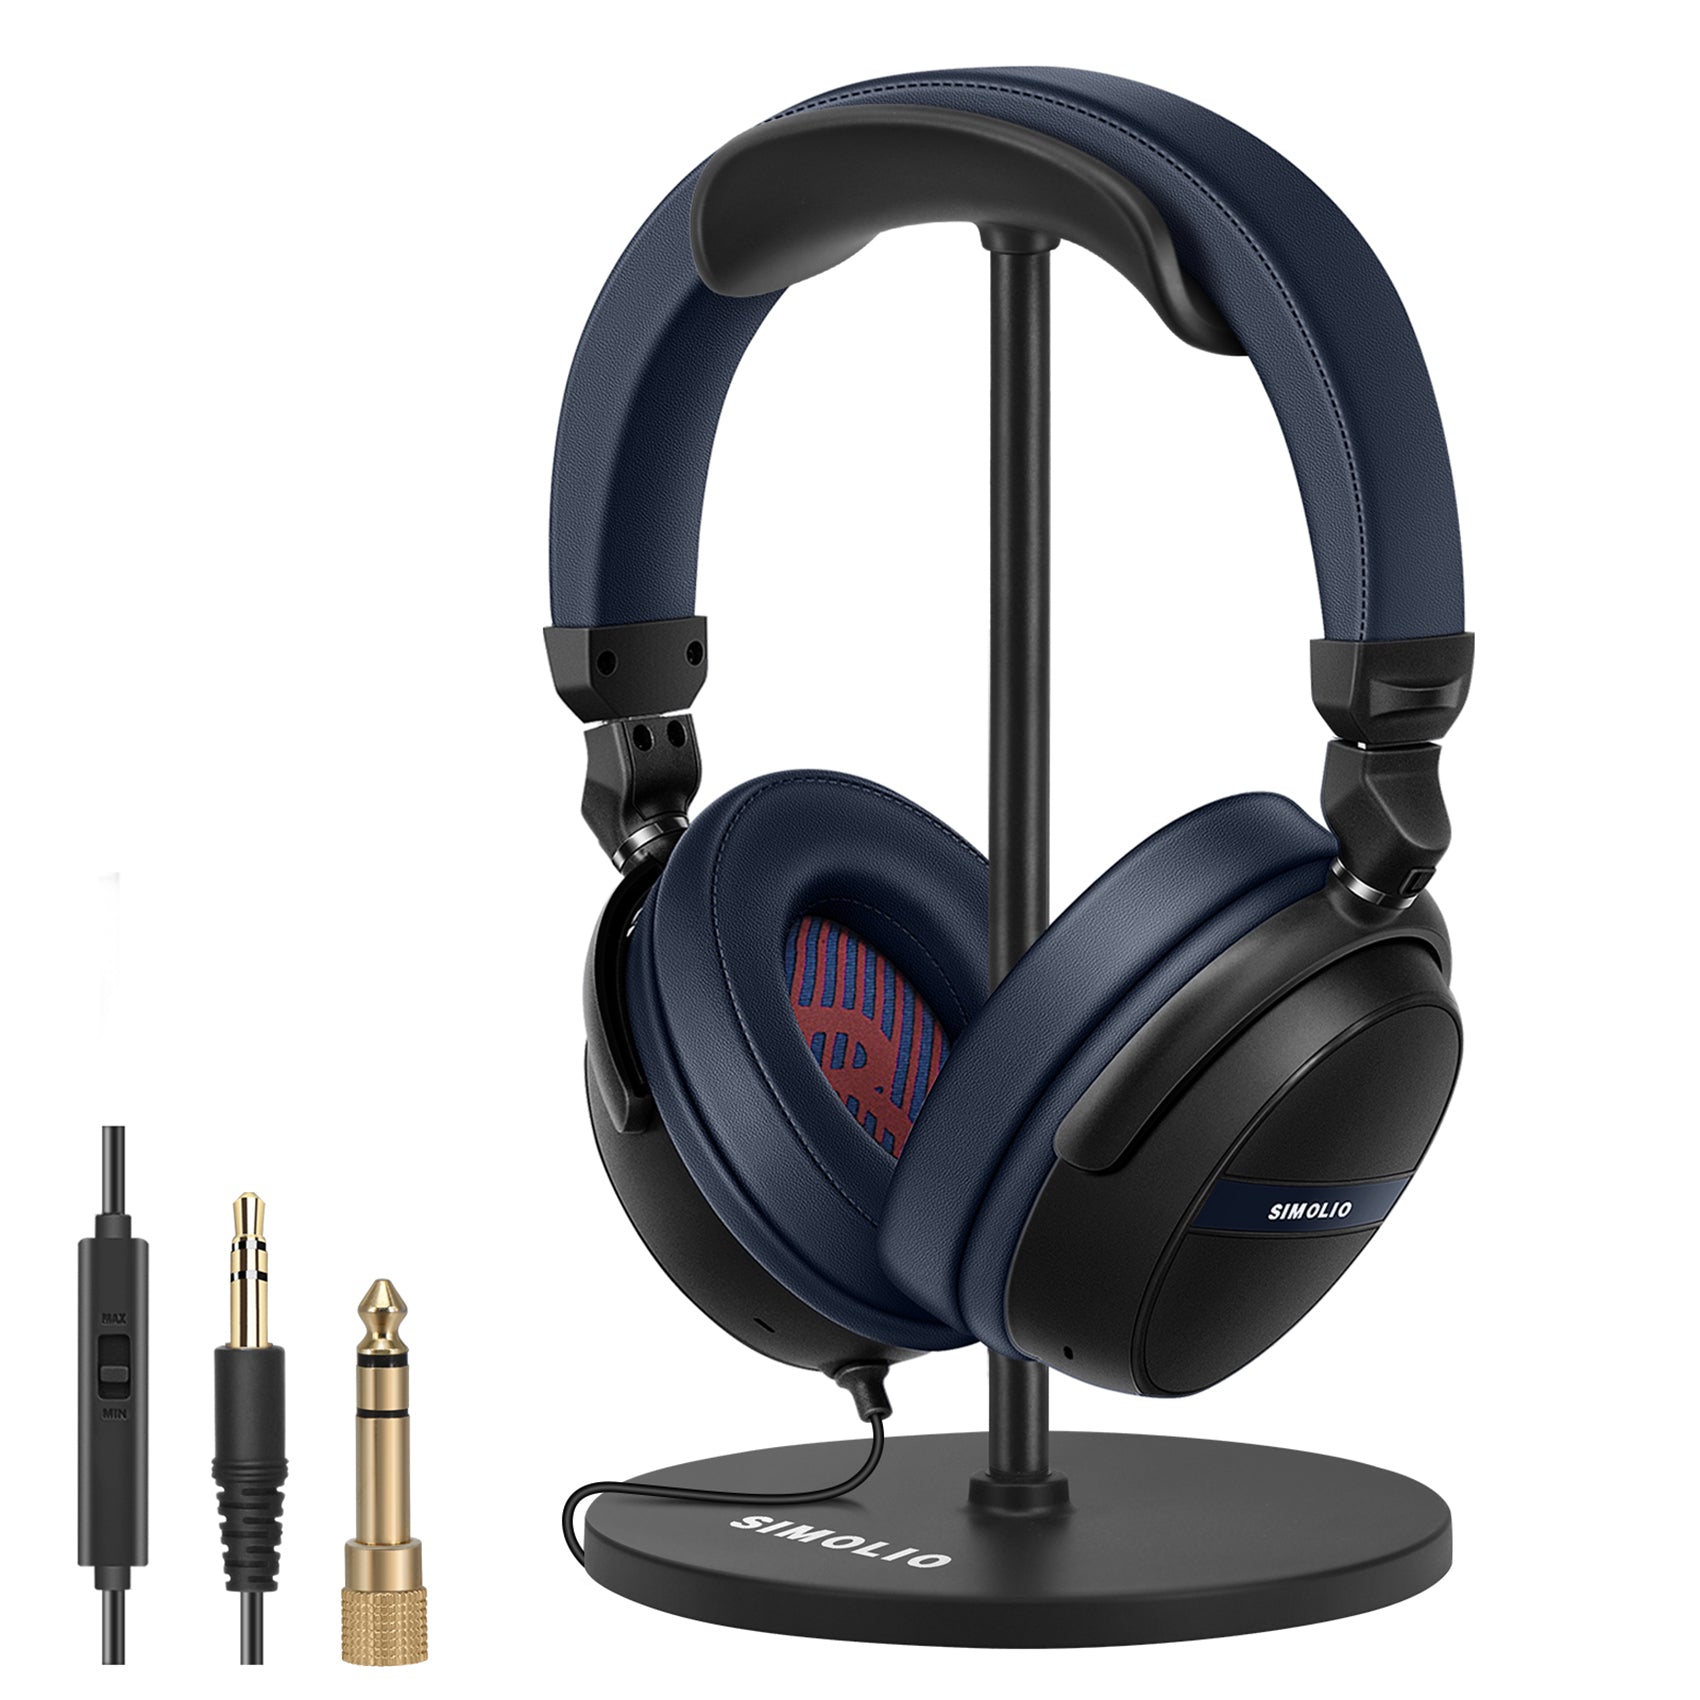 SIMOLIO-Long-Cord-Headphones-for-TV-PC-with-Headset-Stand-SM-906TVB